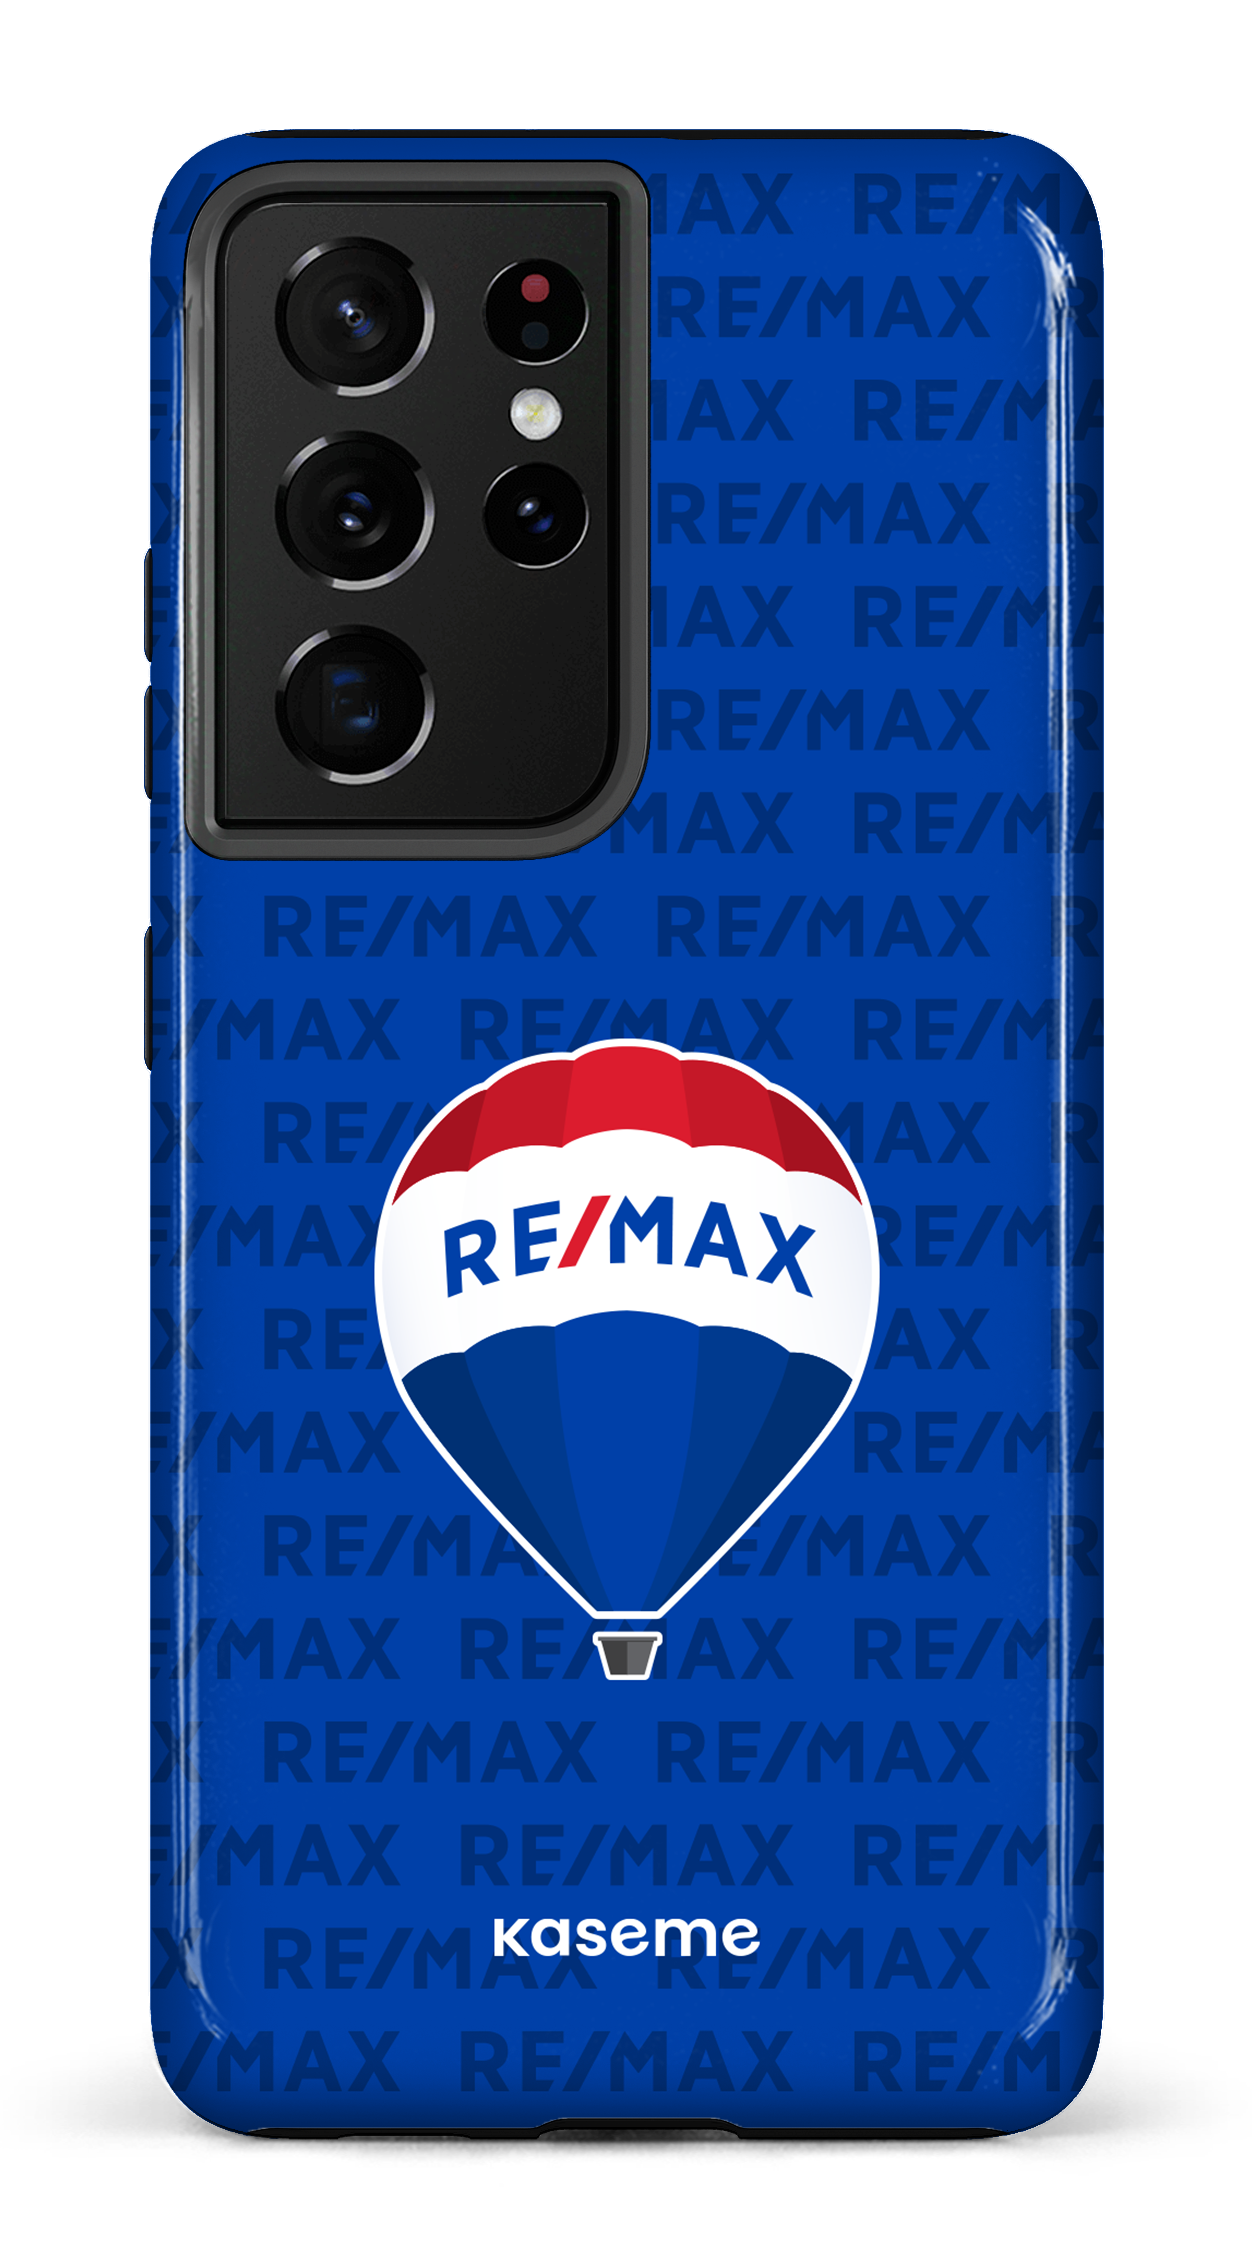 Remax pattern Bleu - Galaxy S21 Ultra